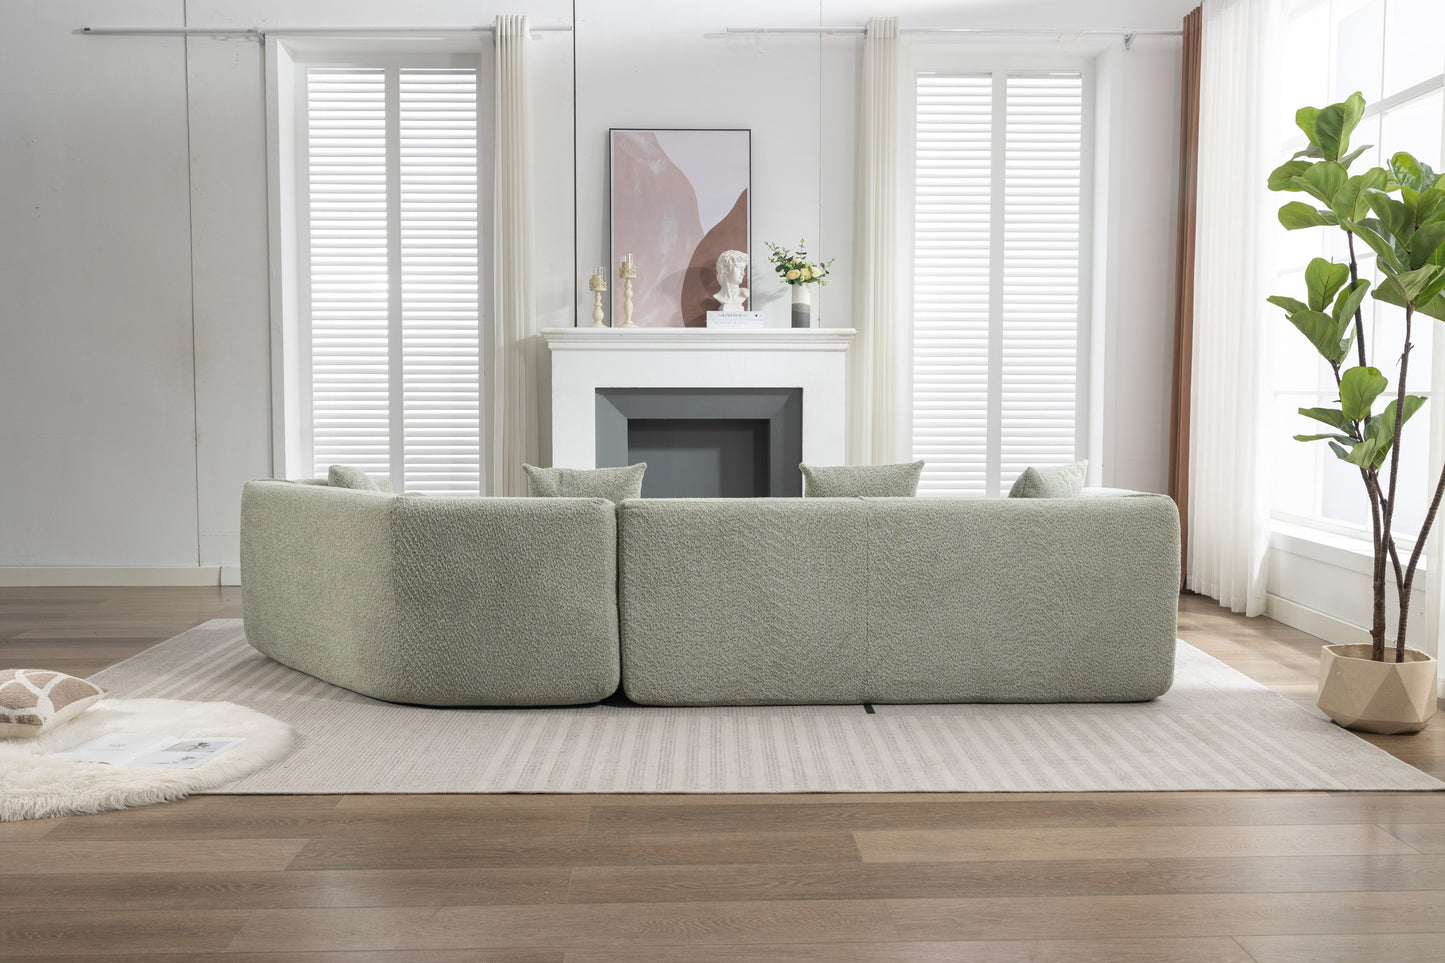 Modular Sectional Sleeper Sofa Set, Green